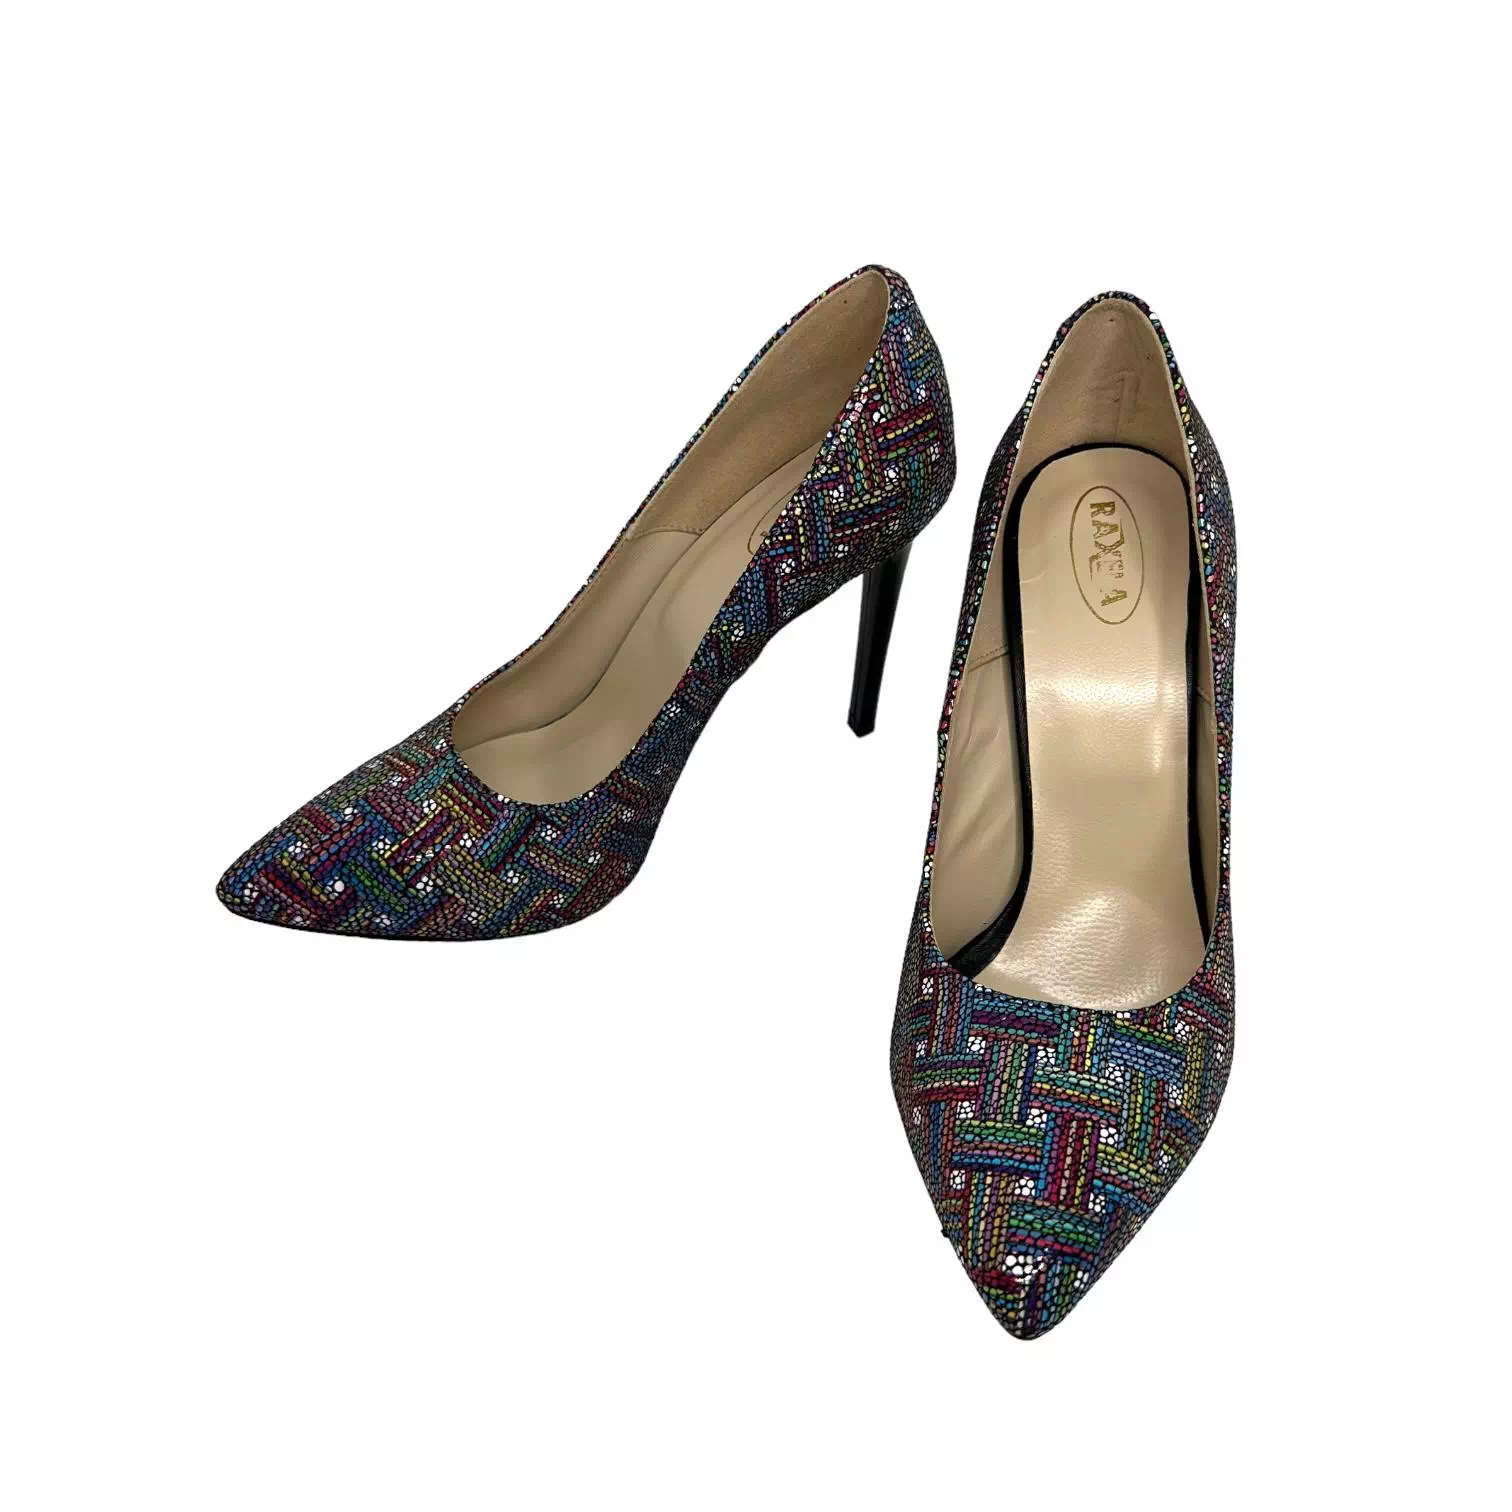 Pantofi Raxela stiletto multicolori